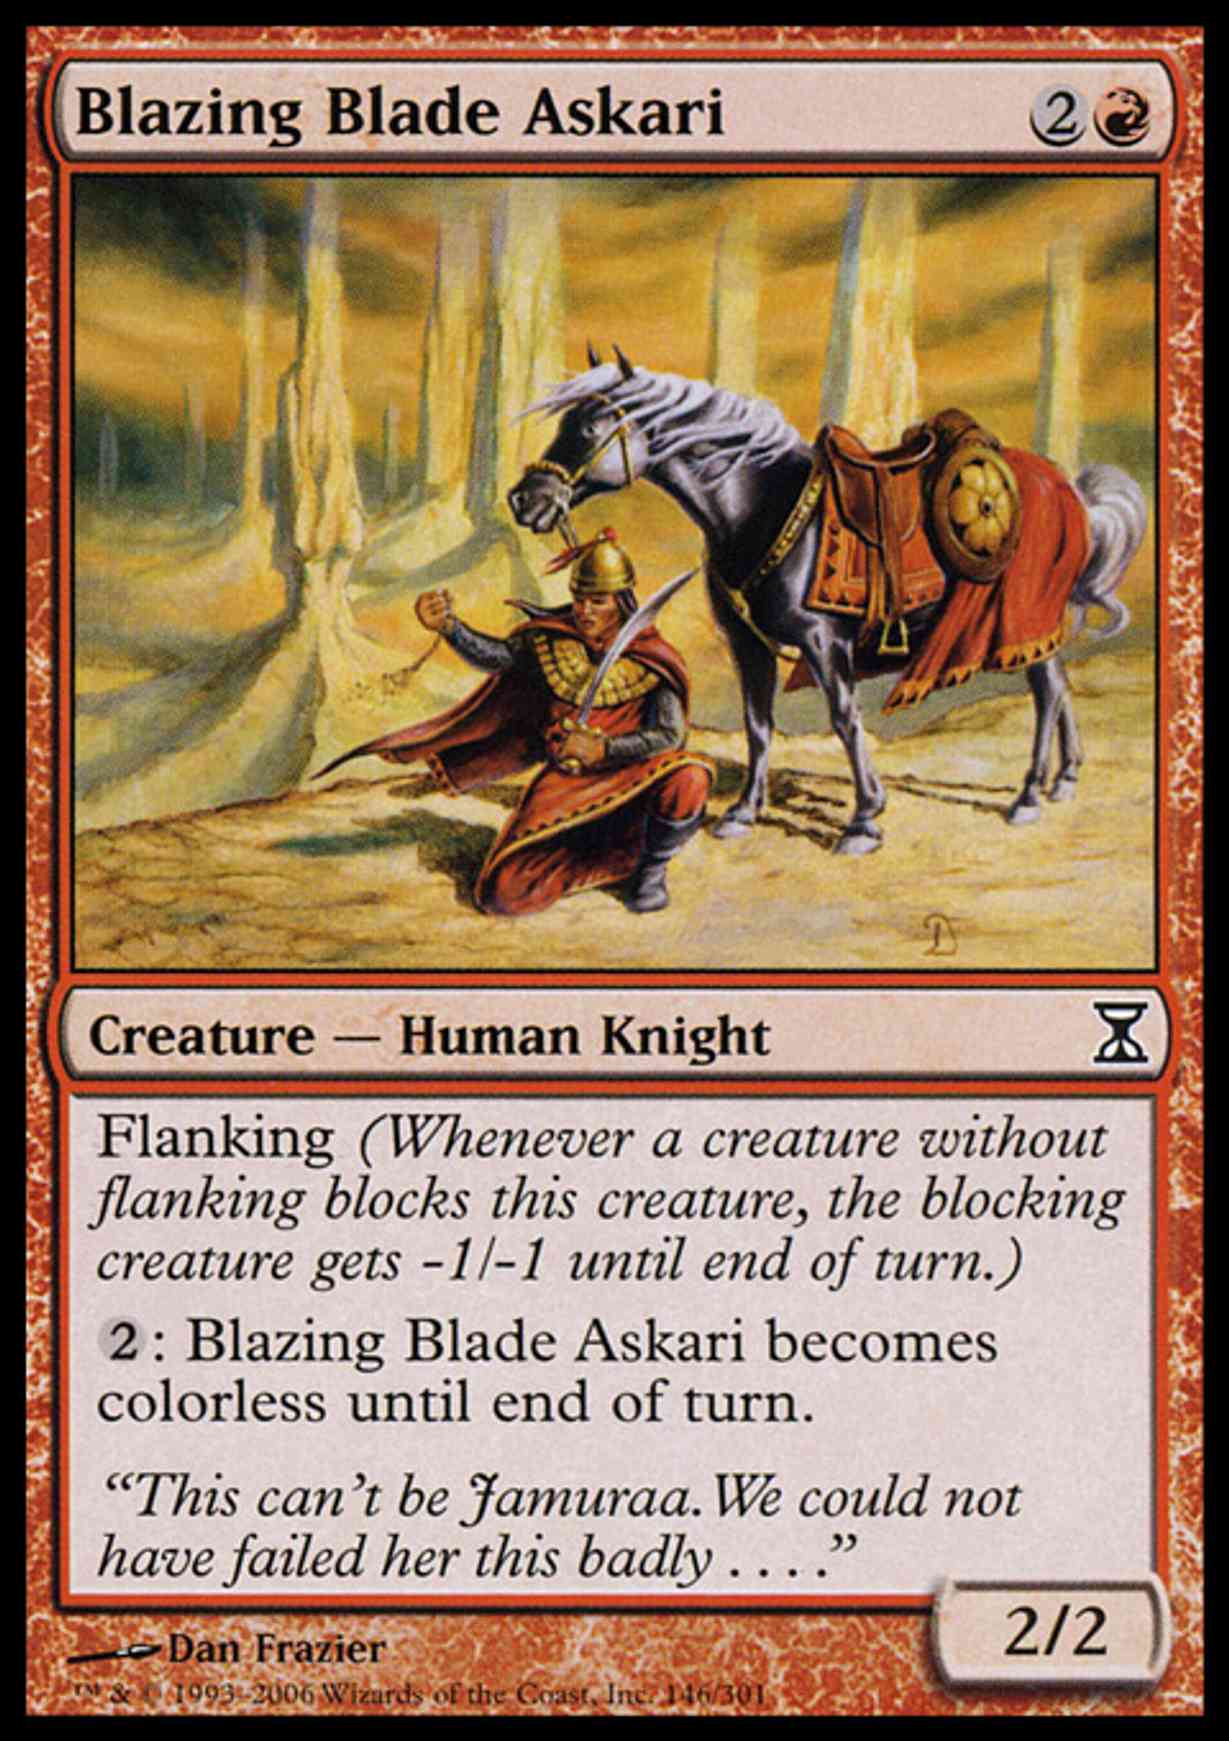 Blazing Blade Askari magic card front